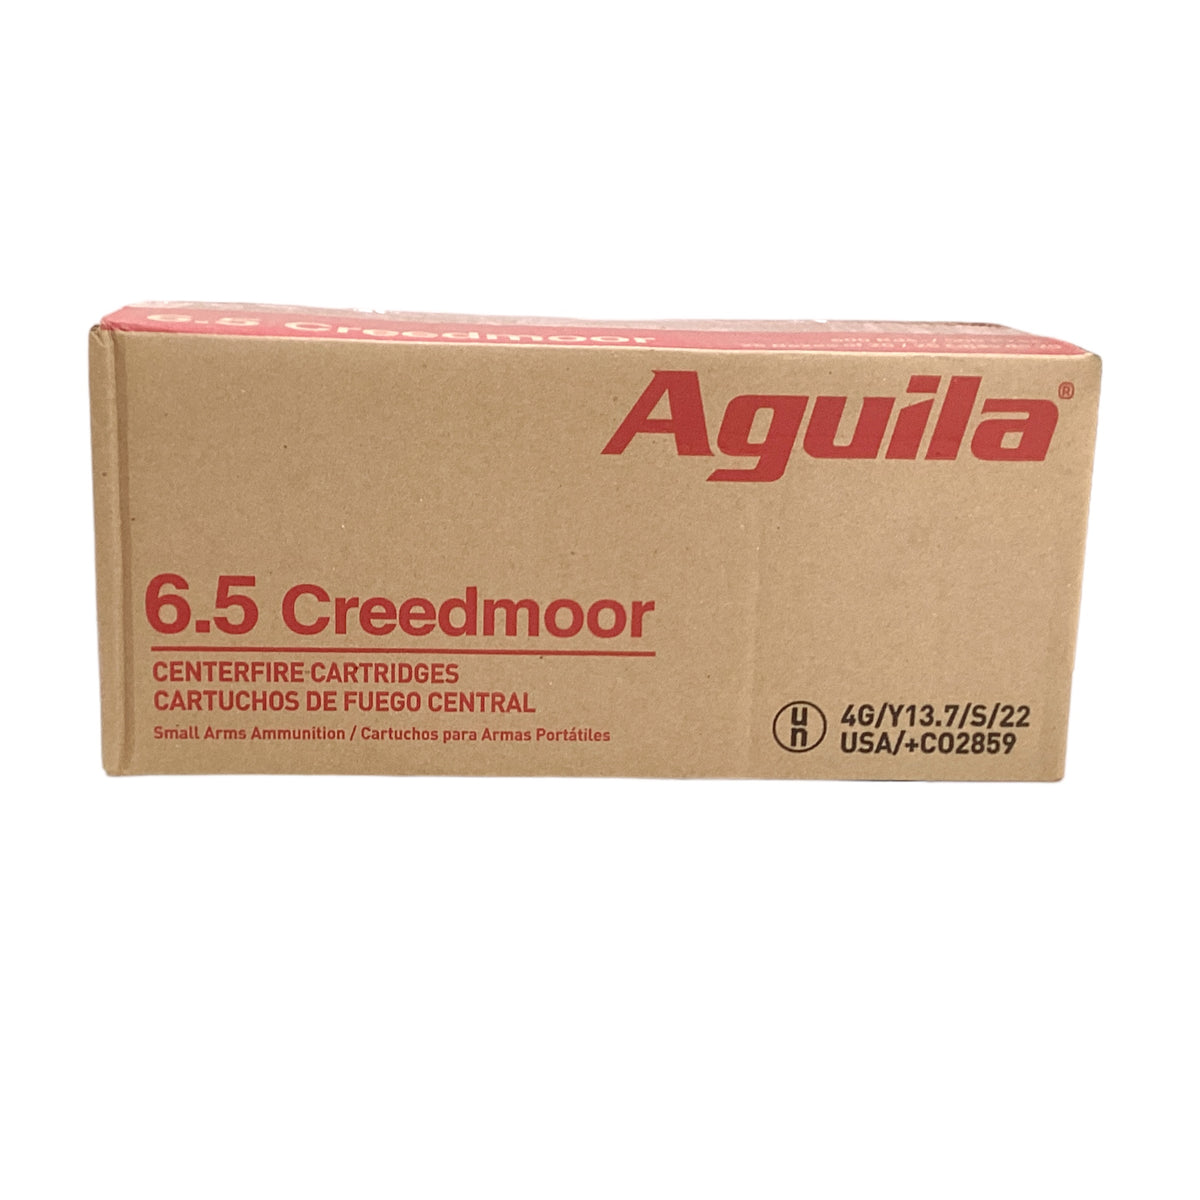 6.5 CREEDMOOR  Aguila Ammunition